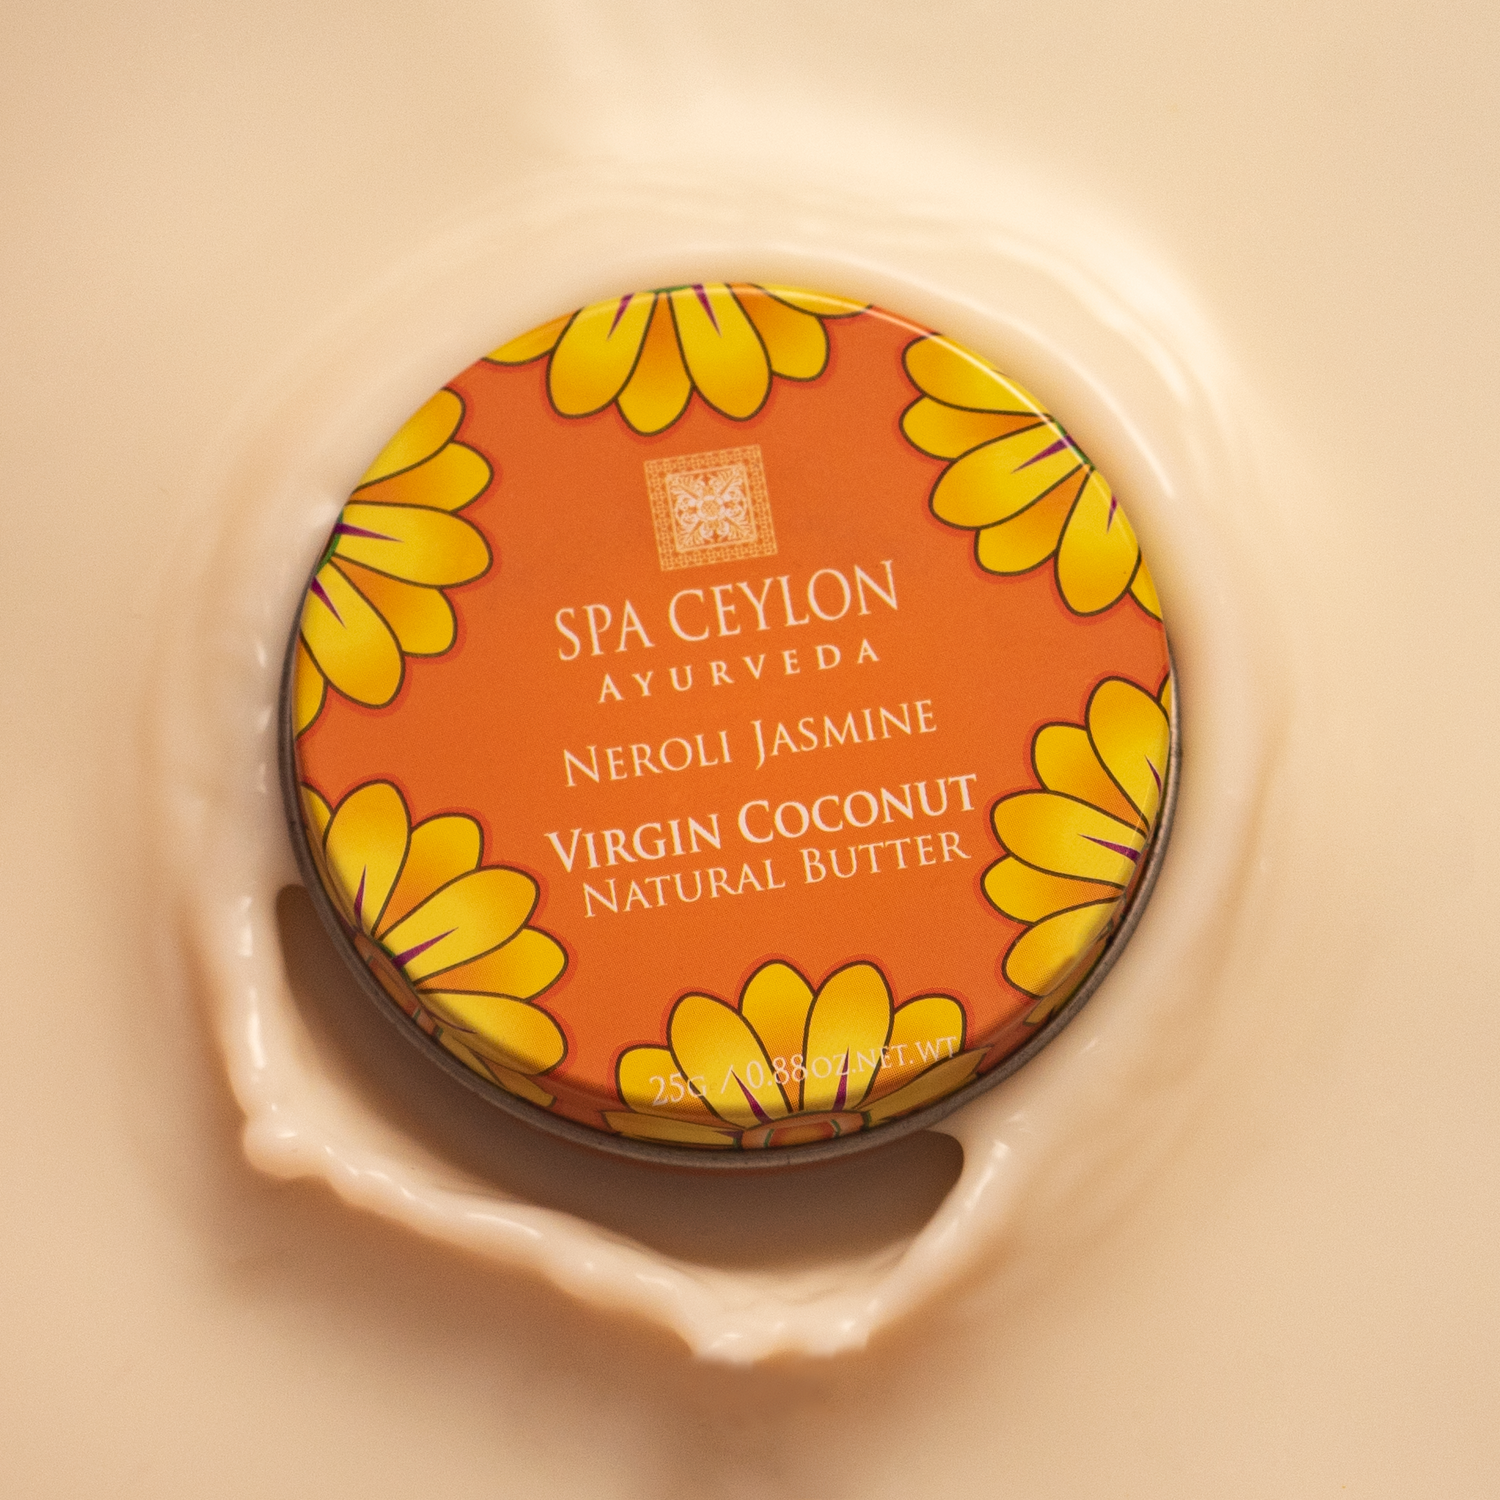 Neroli Jasmine - Virgin Coconut Natural Butter